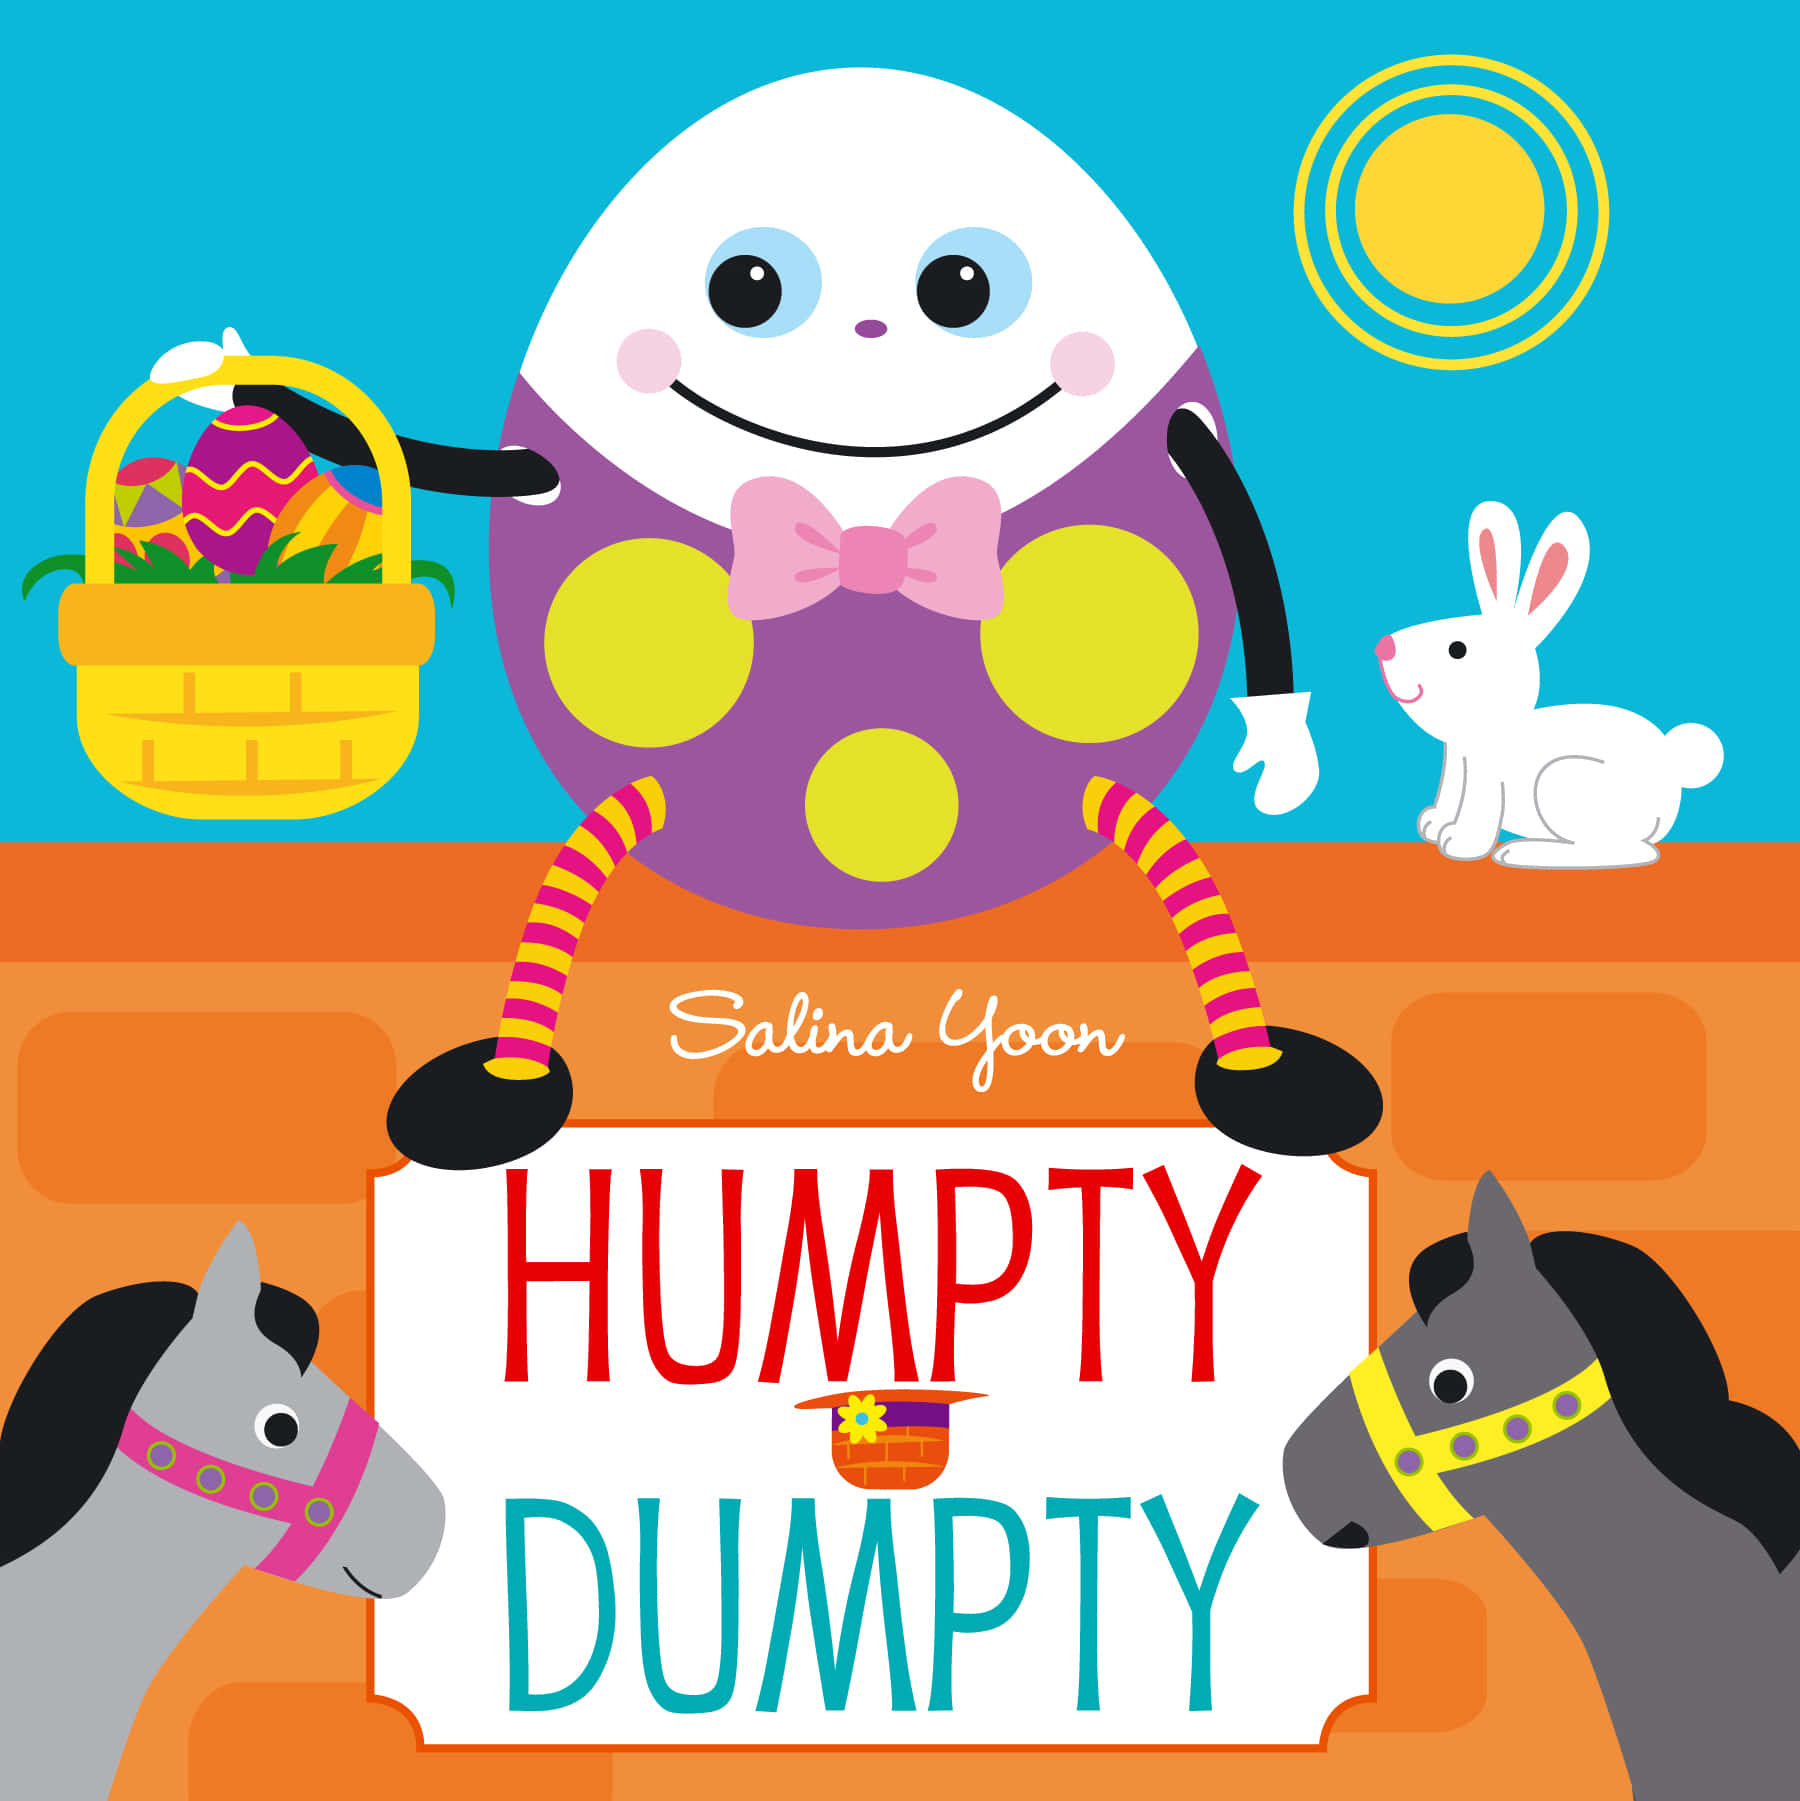 Imagende Humpty Dumpty Con Dos Caballos